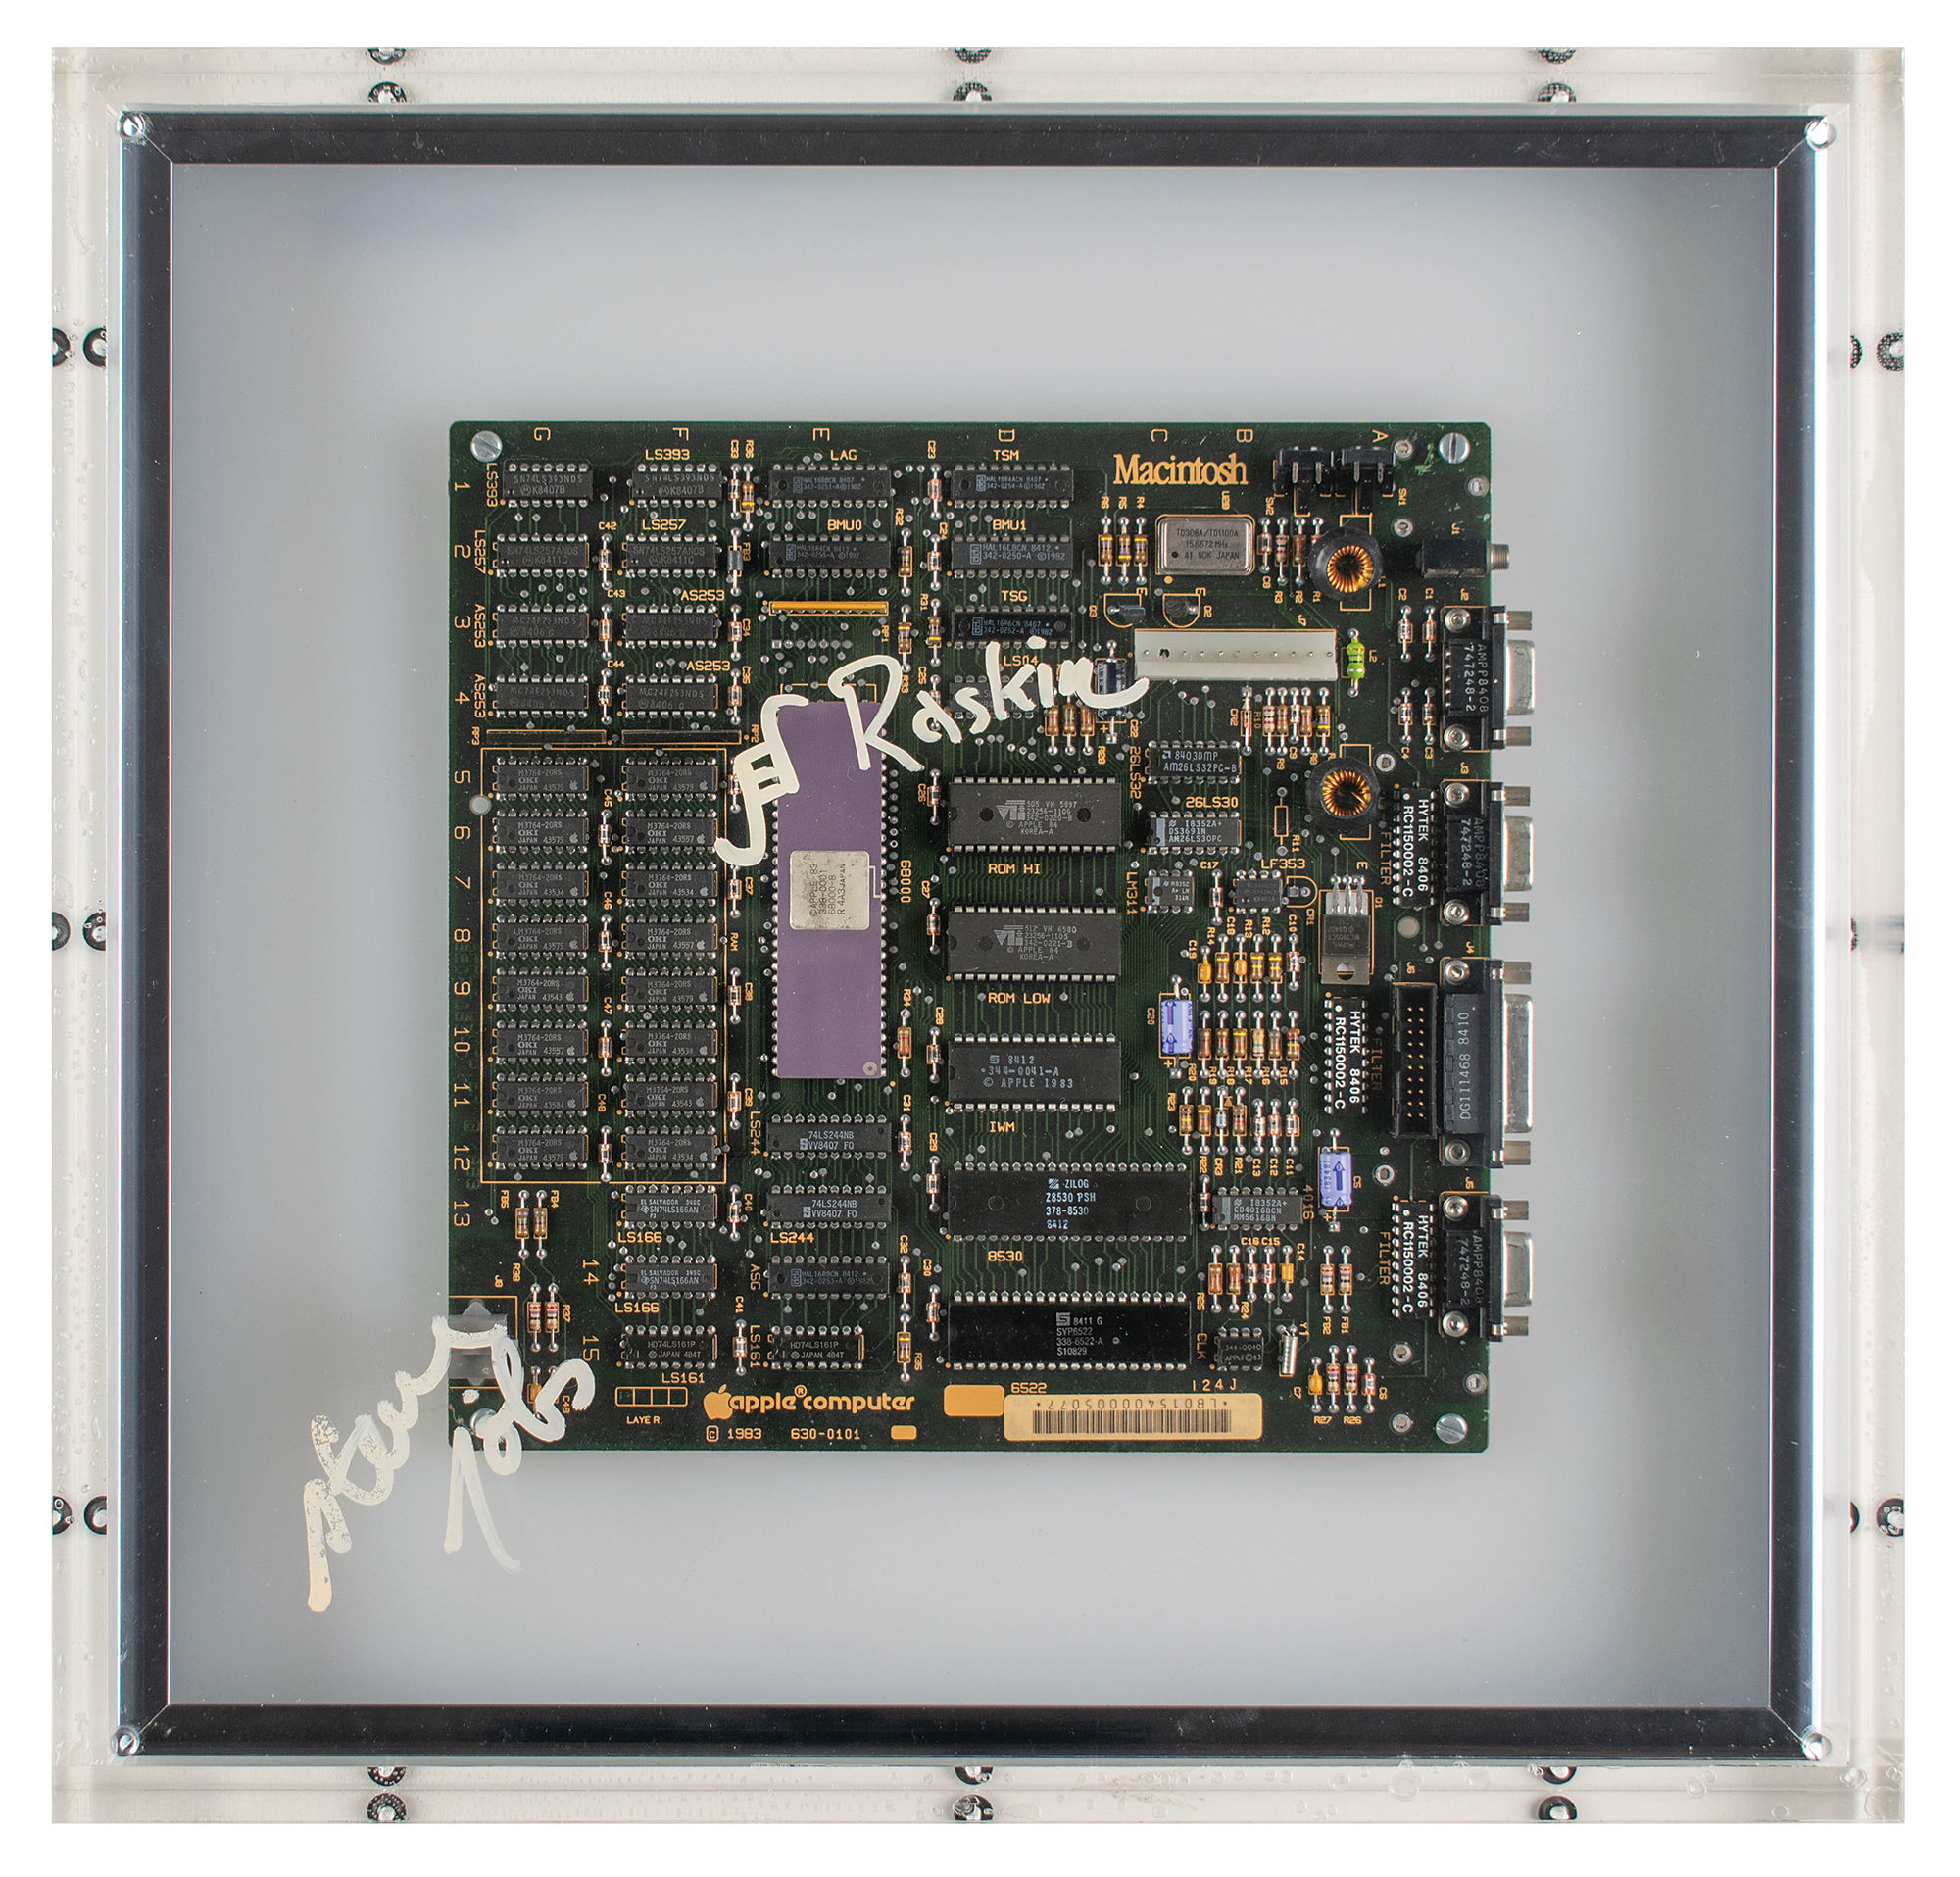 Lot #7005 Steve Jobs and Jef Raskin Signed 128K Macintosh Motherboard Display